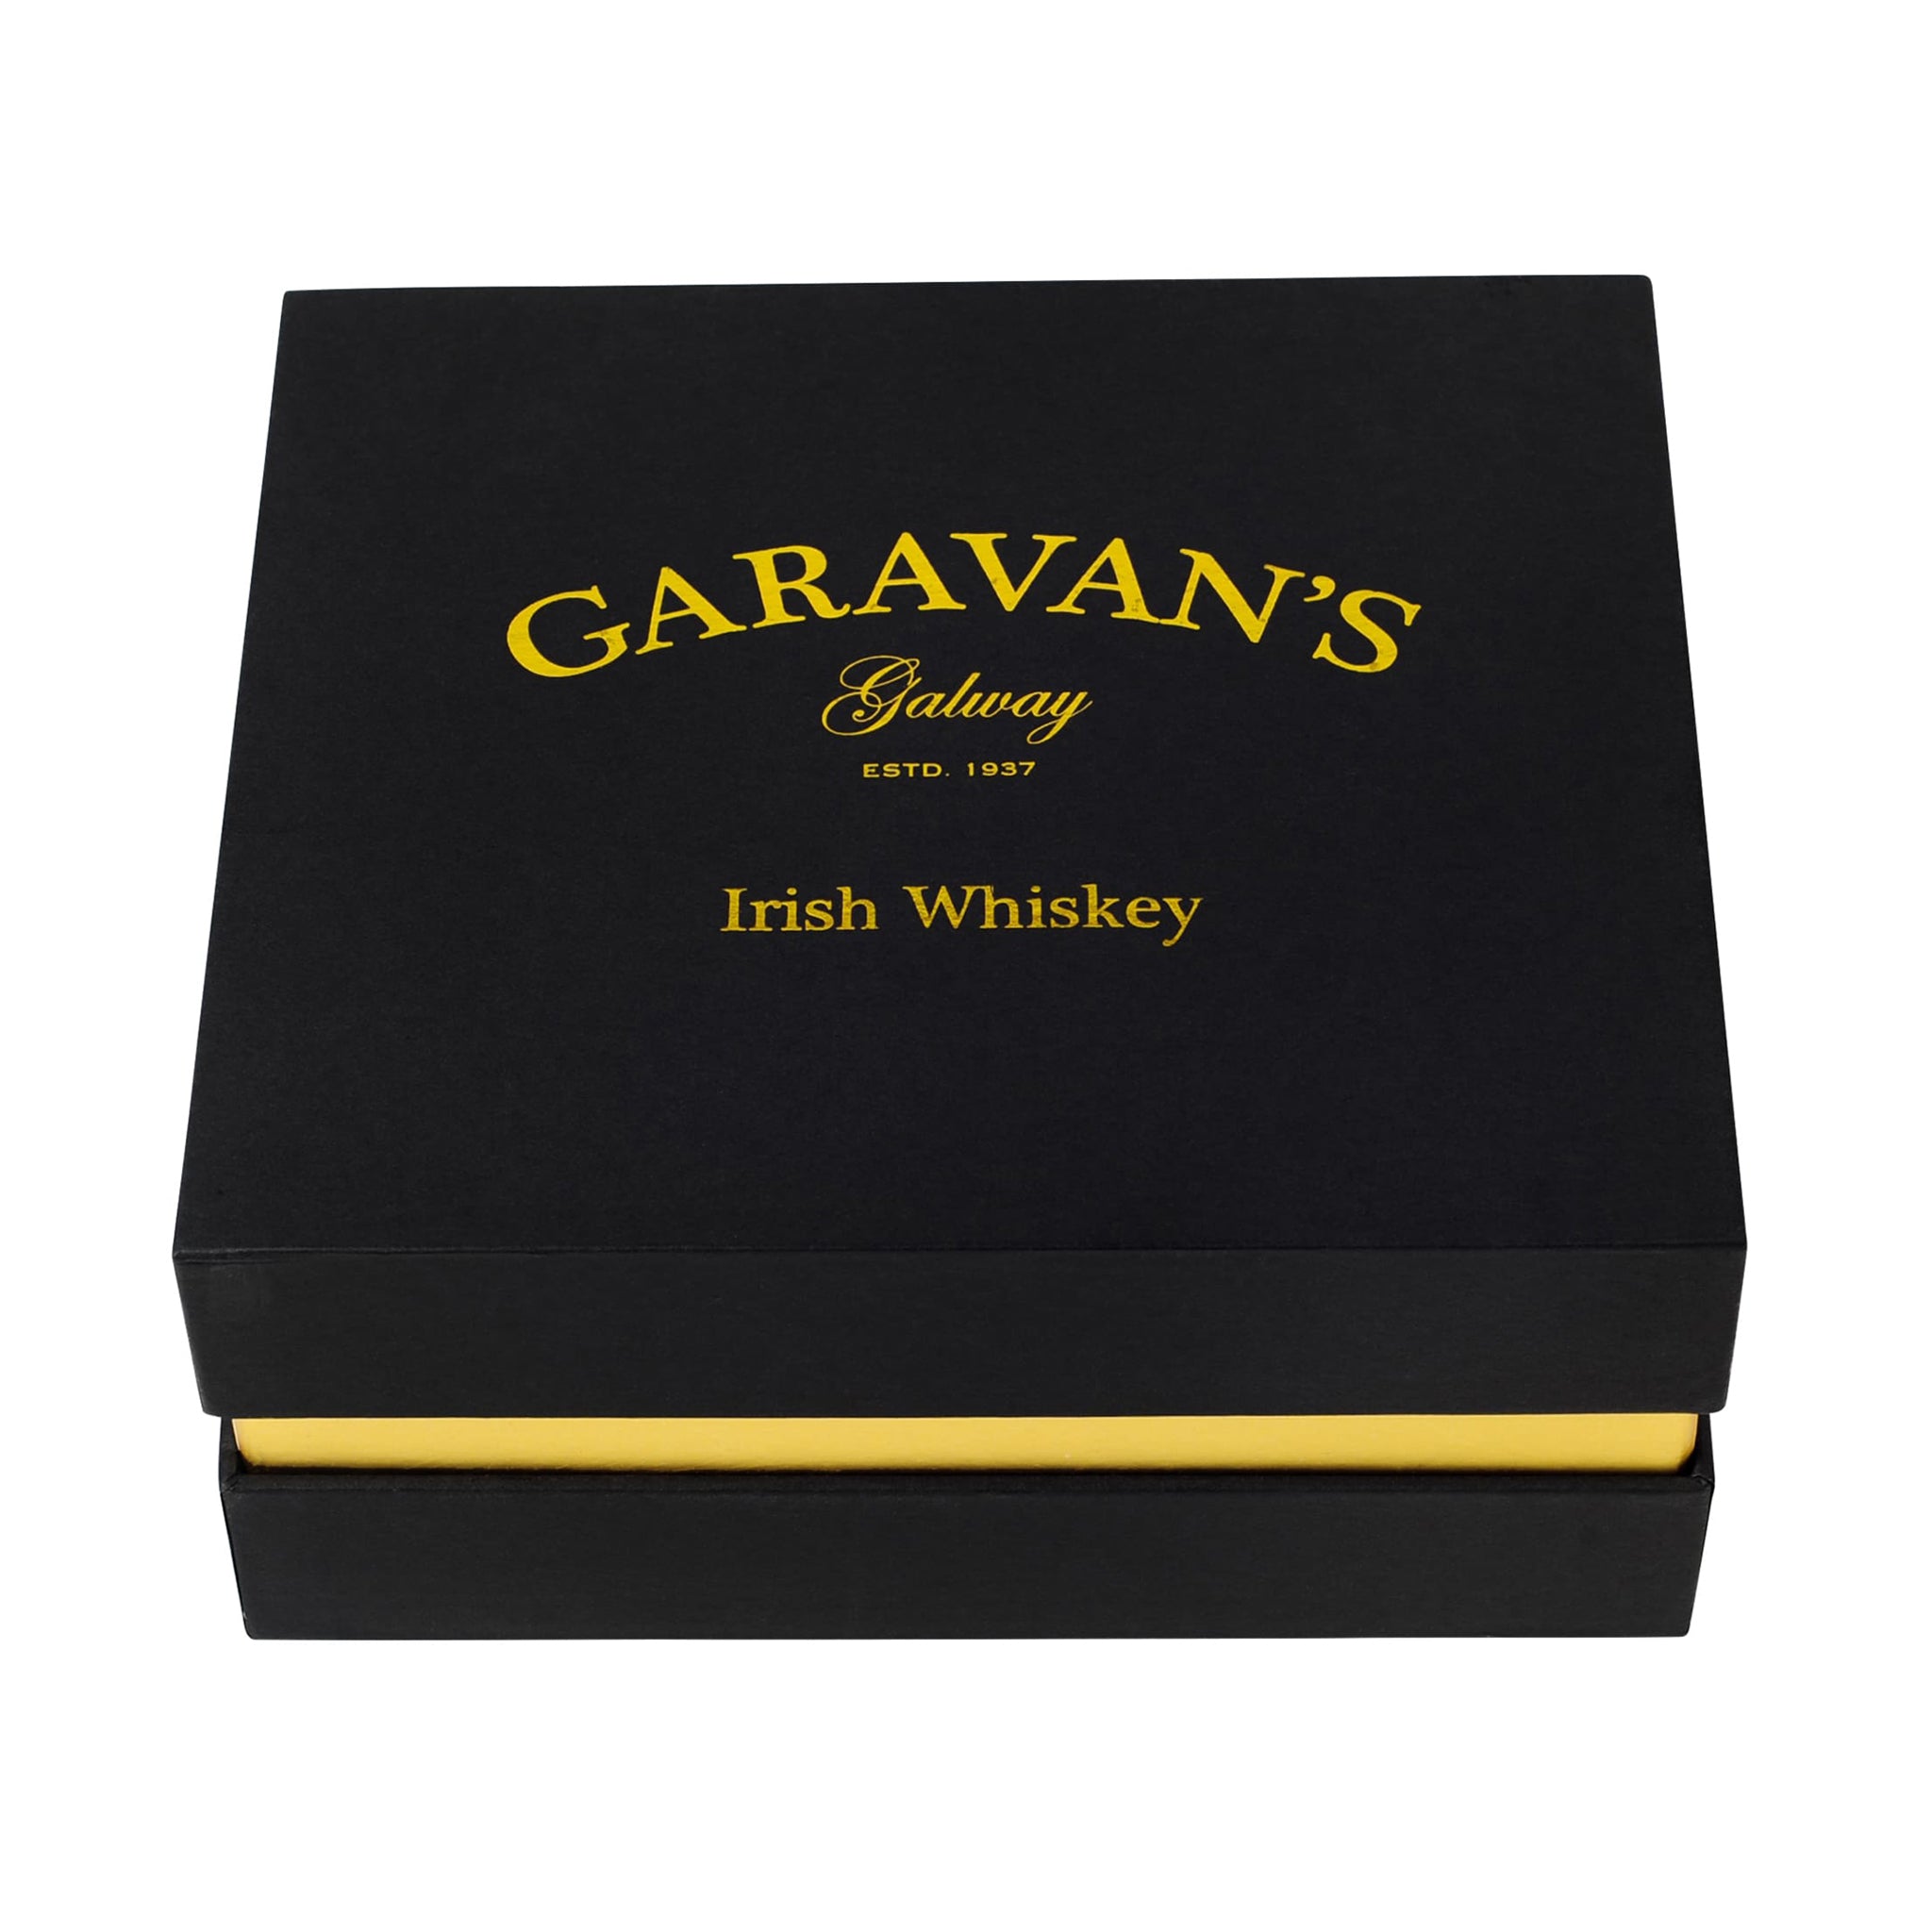 Garavan’s Whiskey Glass Set - Luxurious Gift for Whiskey Lovers - Expertly Crafted Irish Whiskey Glasses in Velvet-lined Gift Box